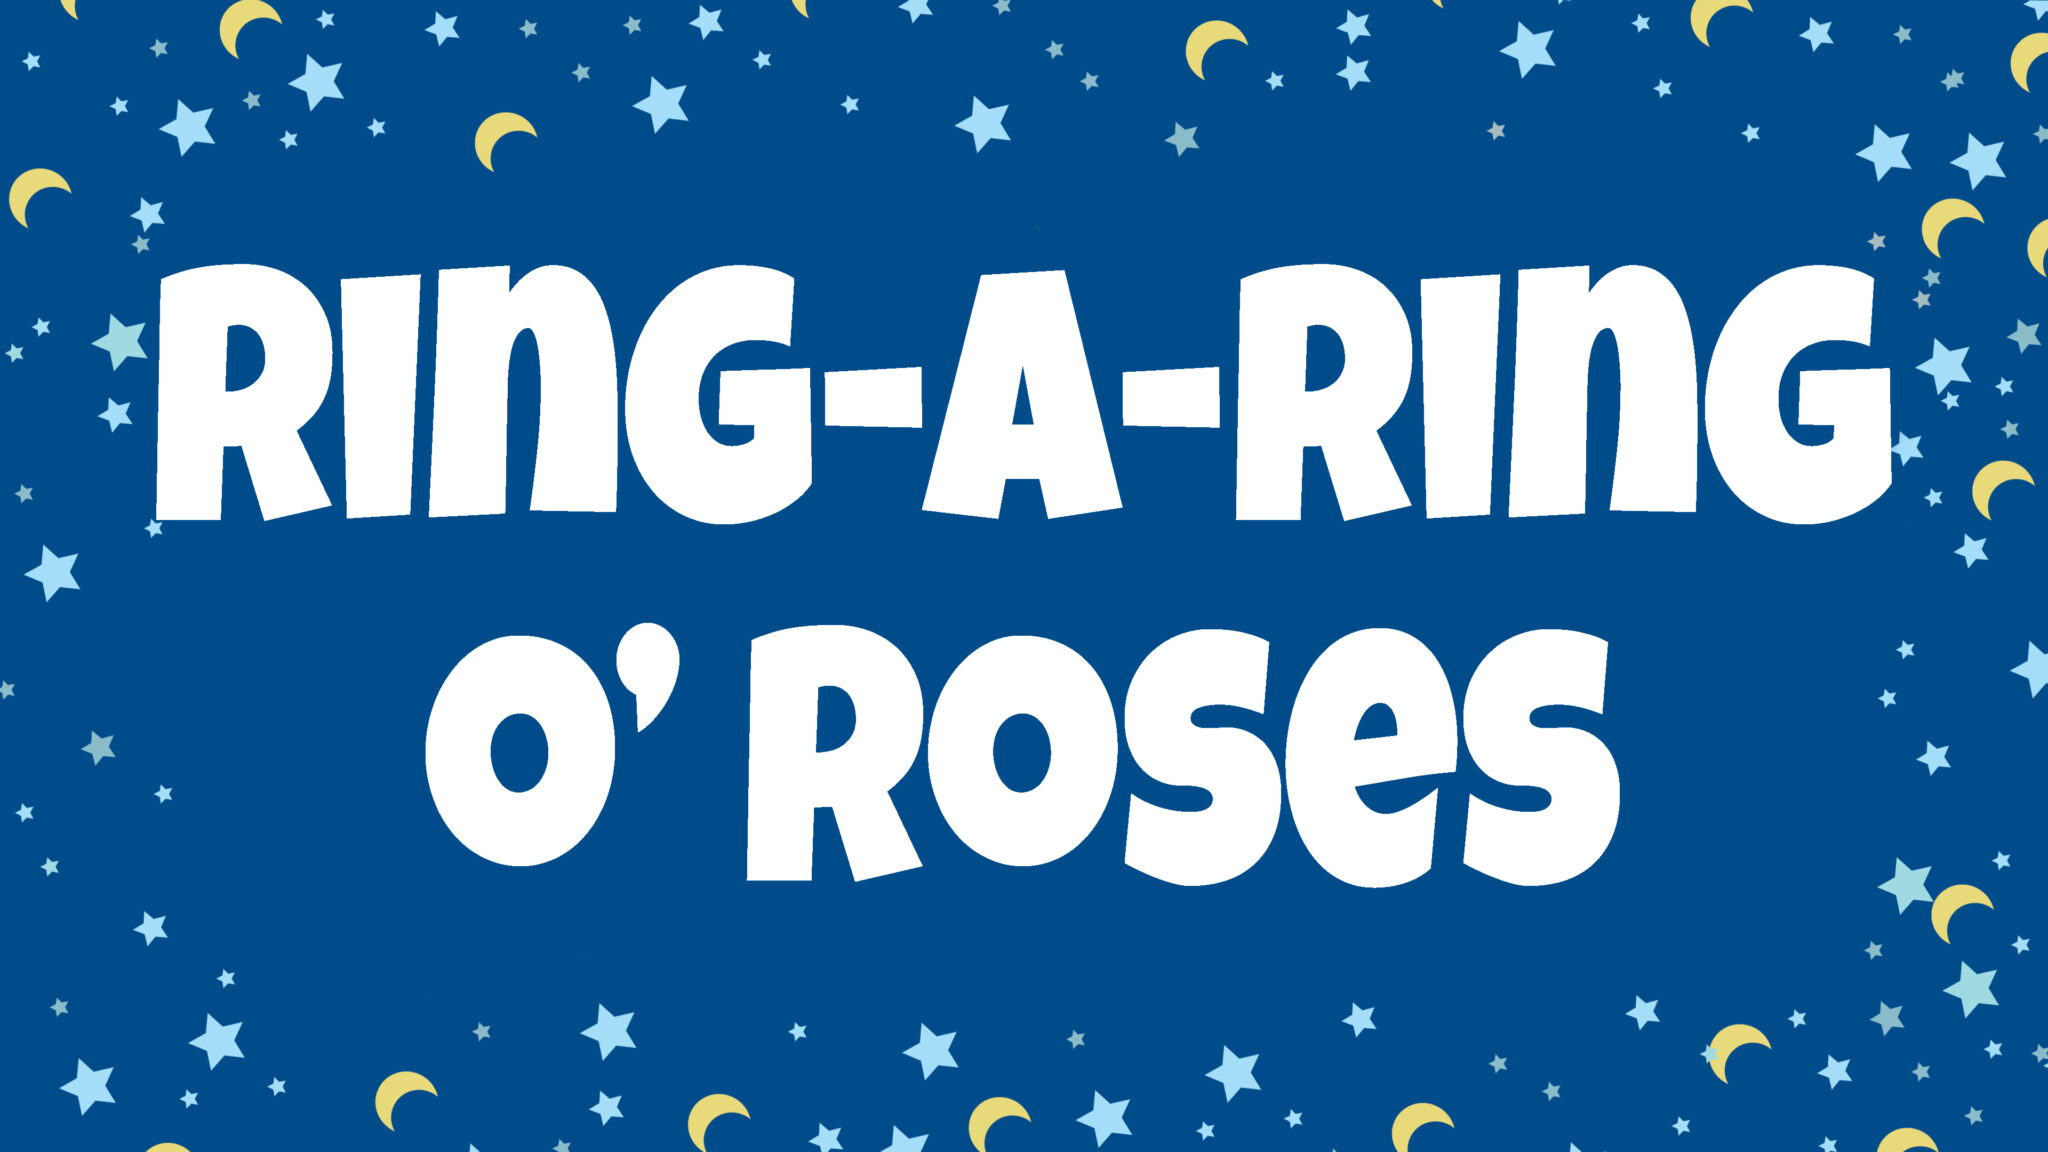 Ringa Ringa Roses Song with Lyrics | Nursery Rhymes Songs for Children |  Kids Songs | Mum Mum TV - YouTube